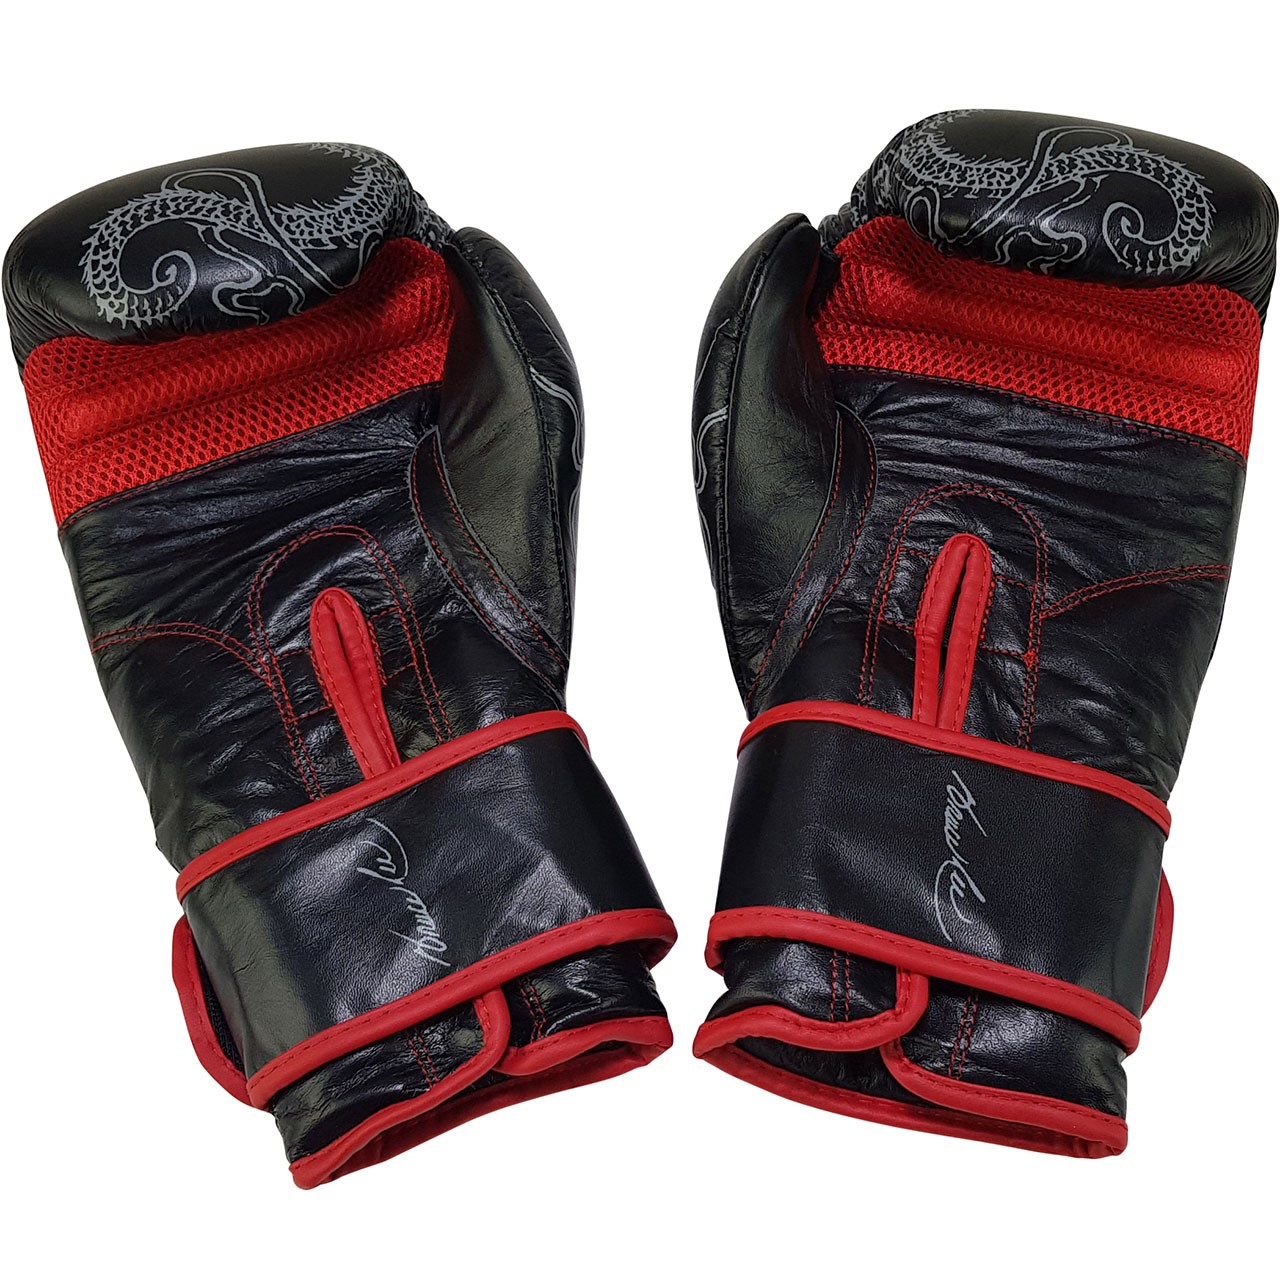 Bruce Lee Deluxe Boxing Gloves Boxhandschuhe